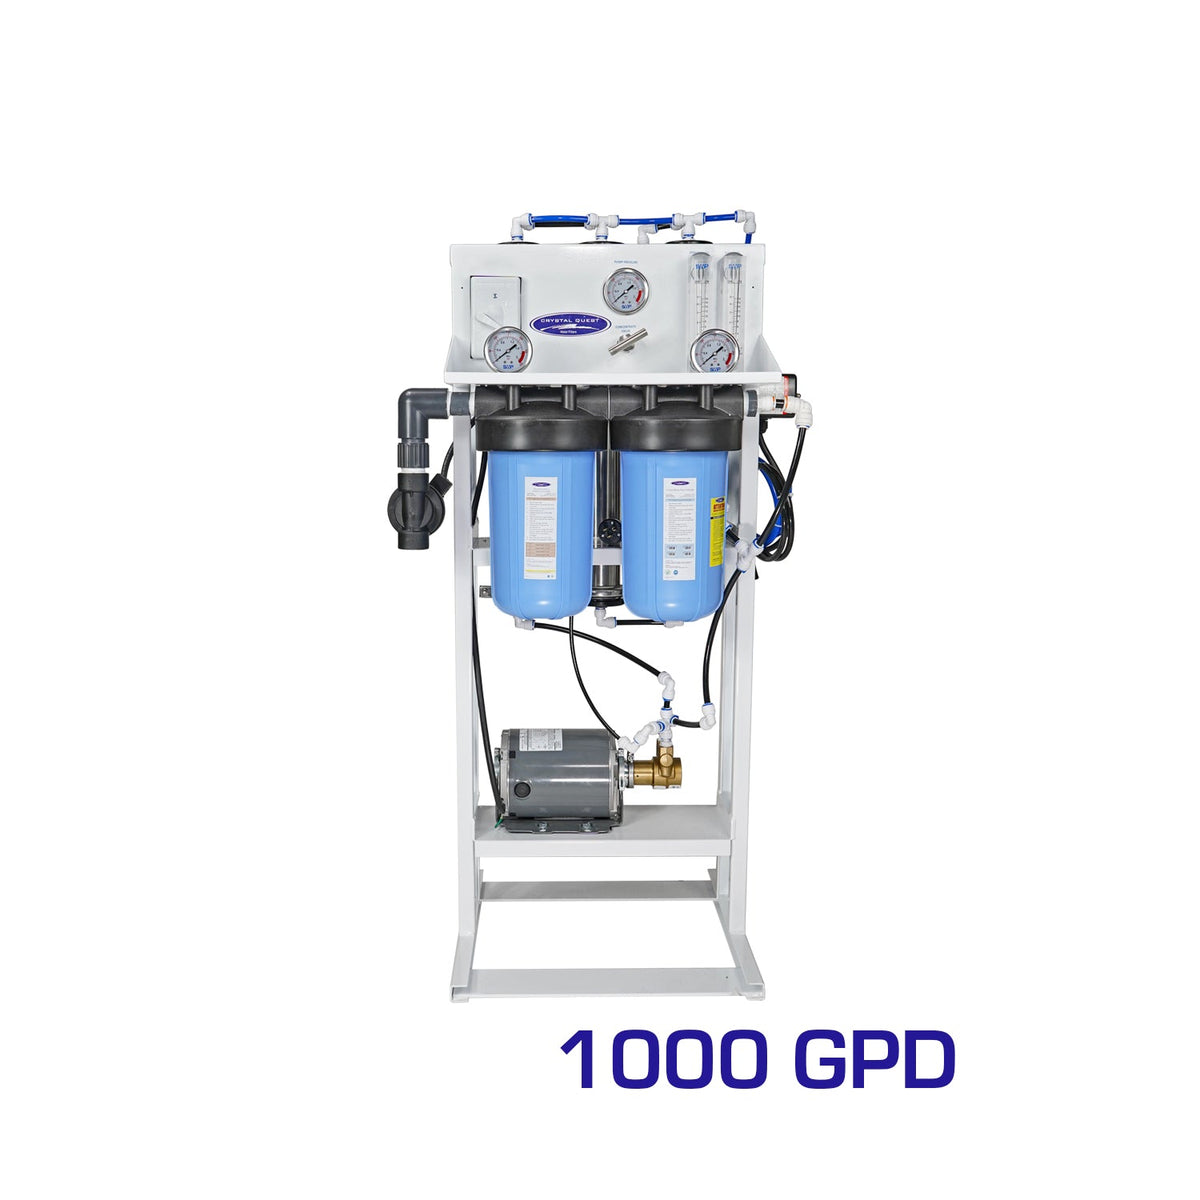 1000 GPD / Standalone Whole House Reverse Osmosis System - Reverse Osmosis System - Crystal Quest